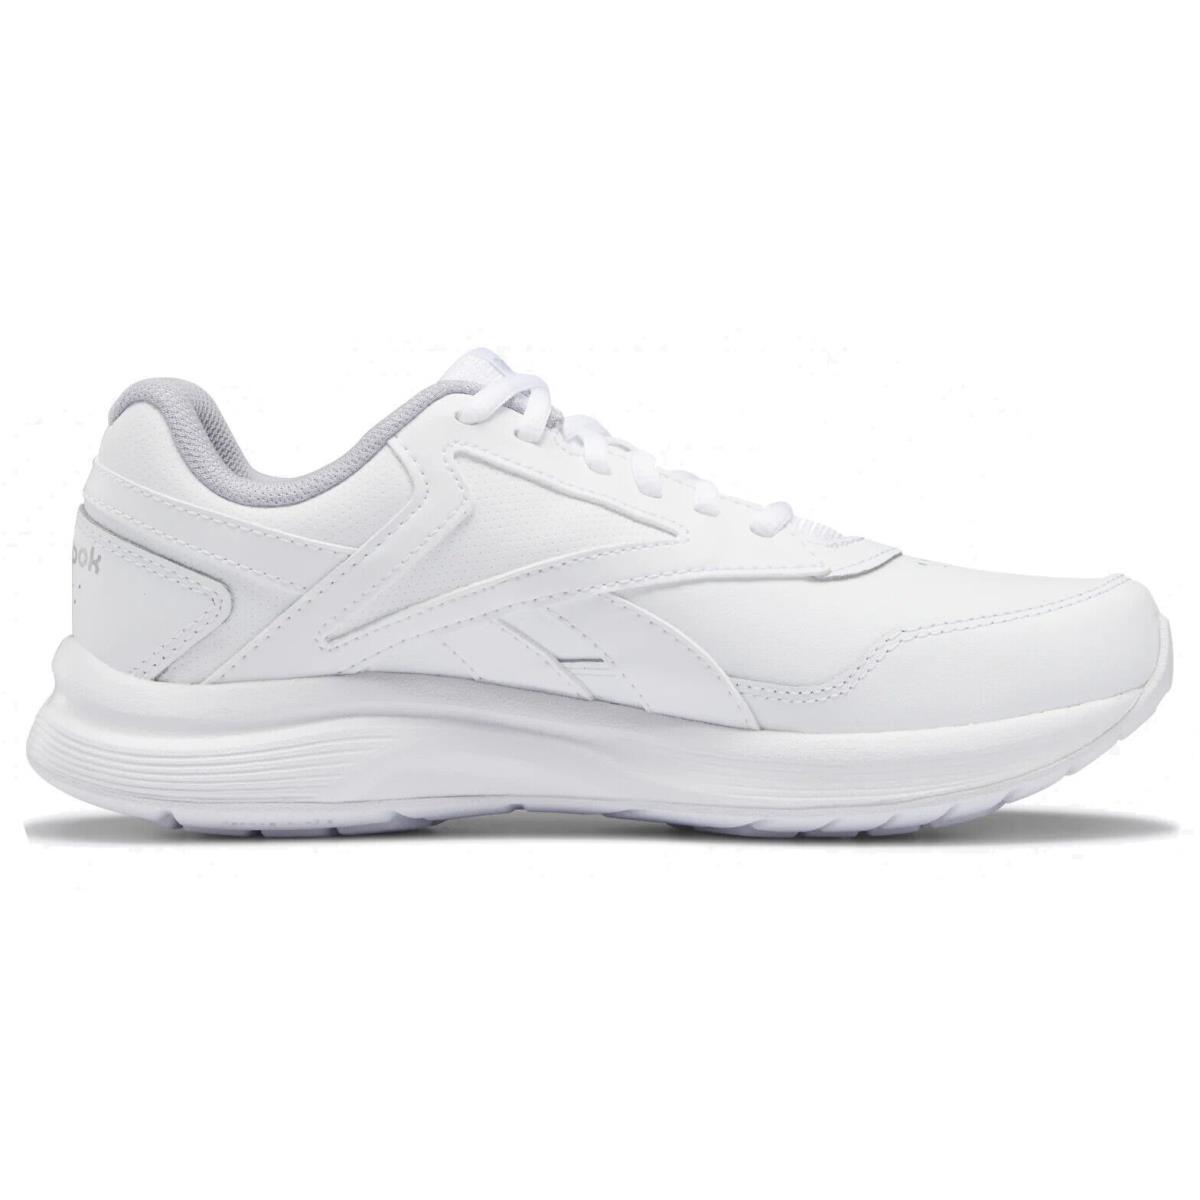 Reebok Women`s Walking Shoes Leather Upper Lightweight Breathable Ultra 7 Dmx White